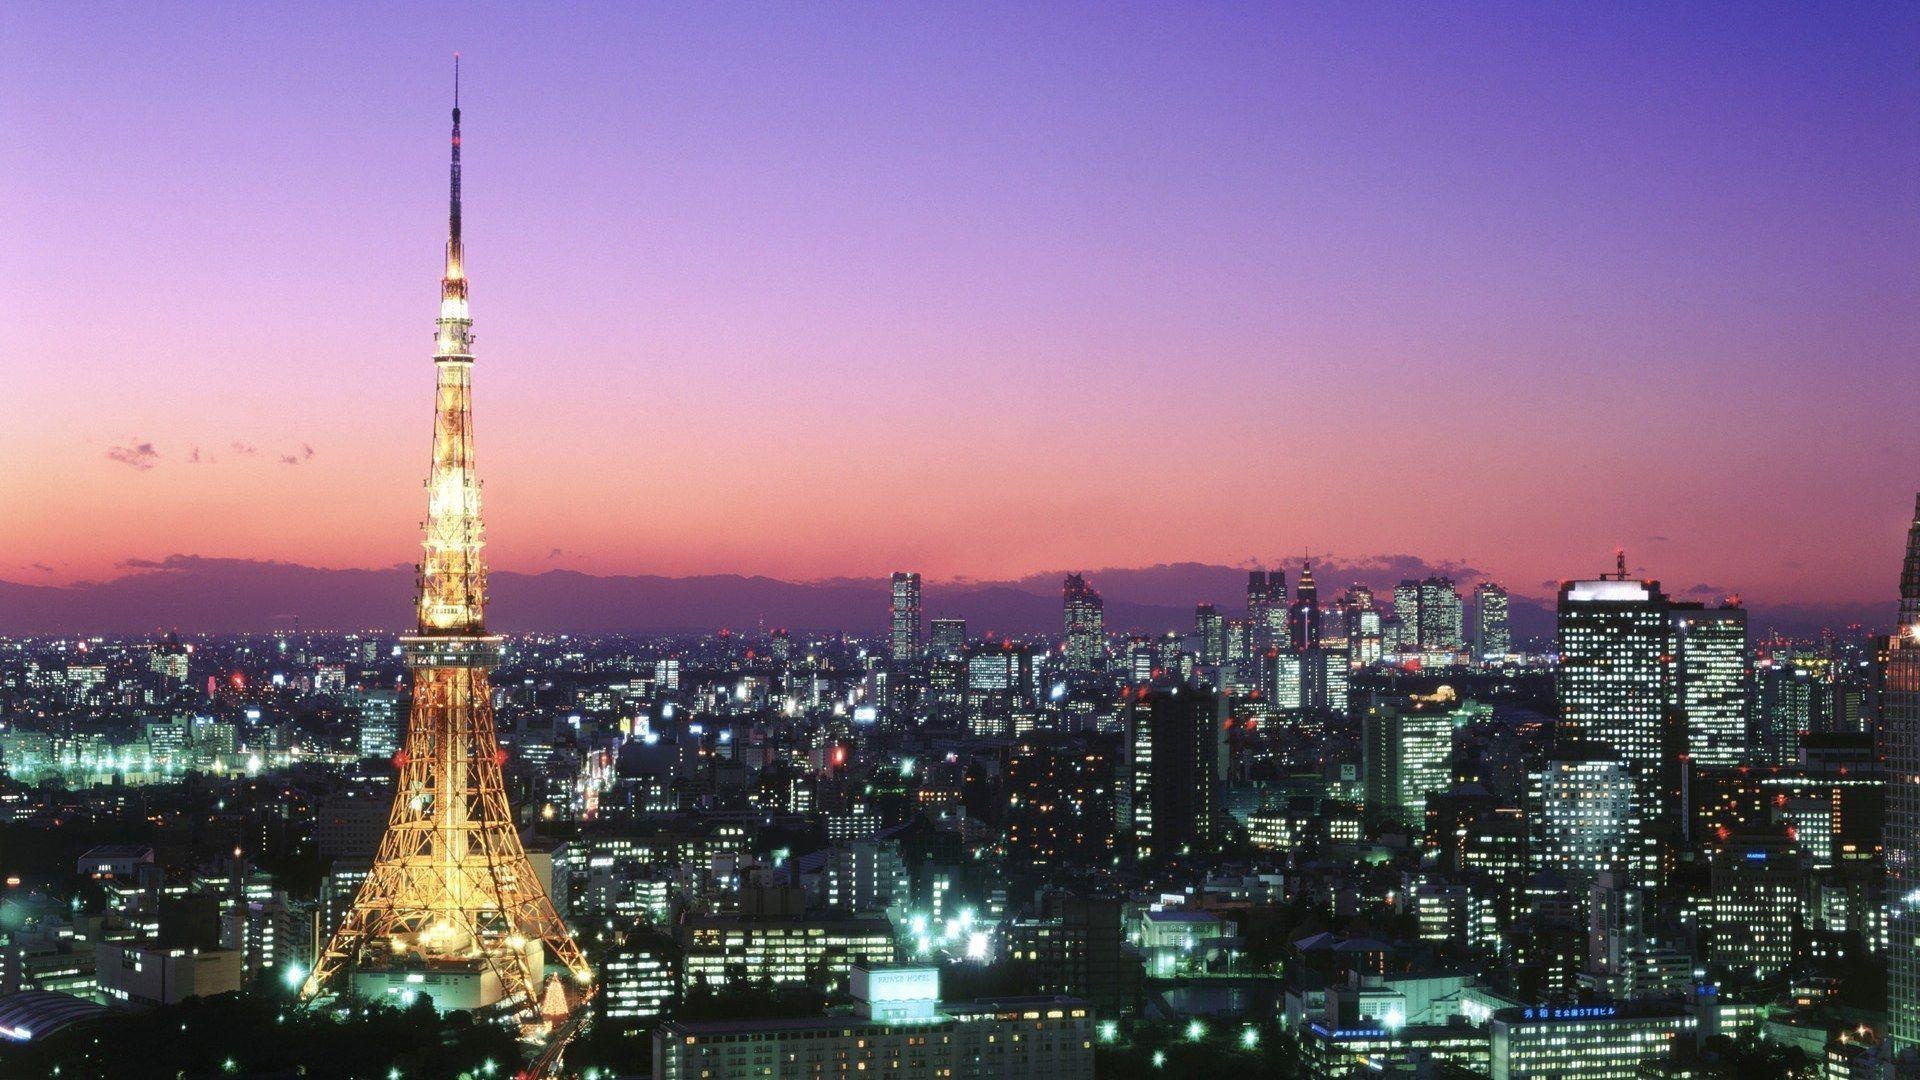 Tokyo Skyline, Japanese culture, Exquisite wallpapers, Modern metropolis, 1920x1080 Full HD Desktop